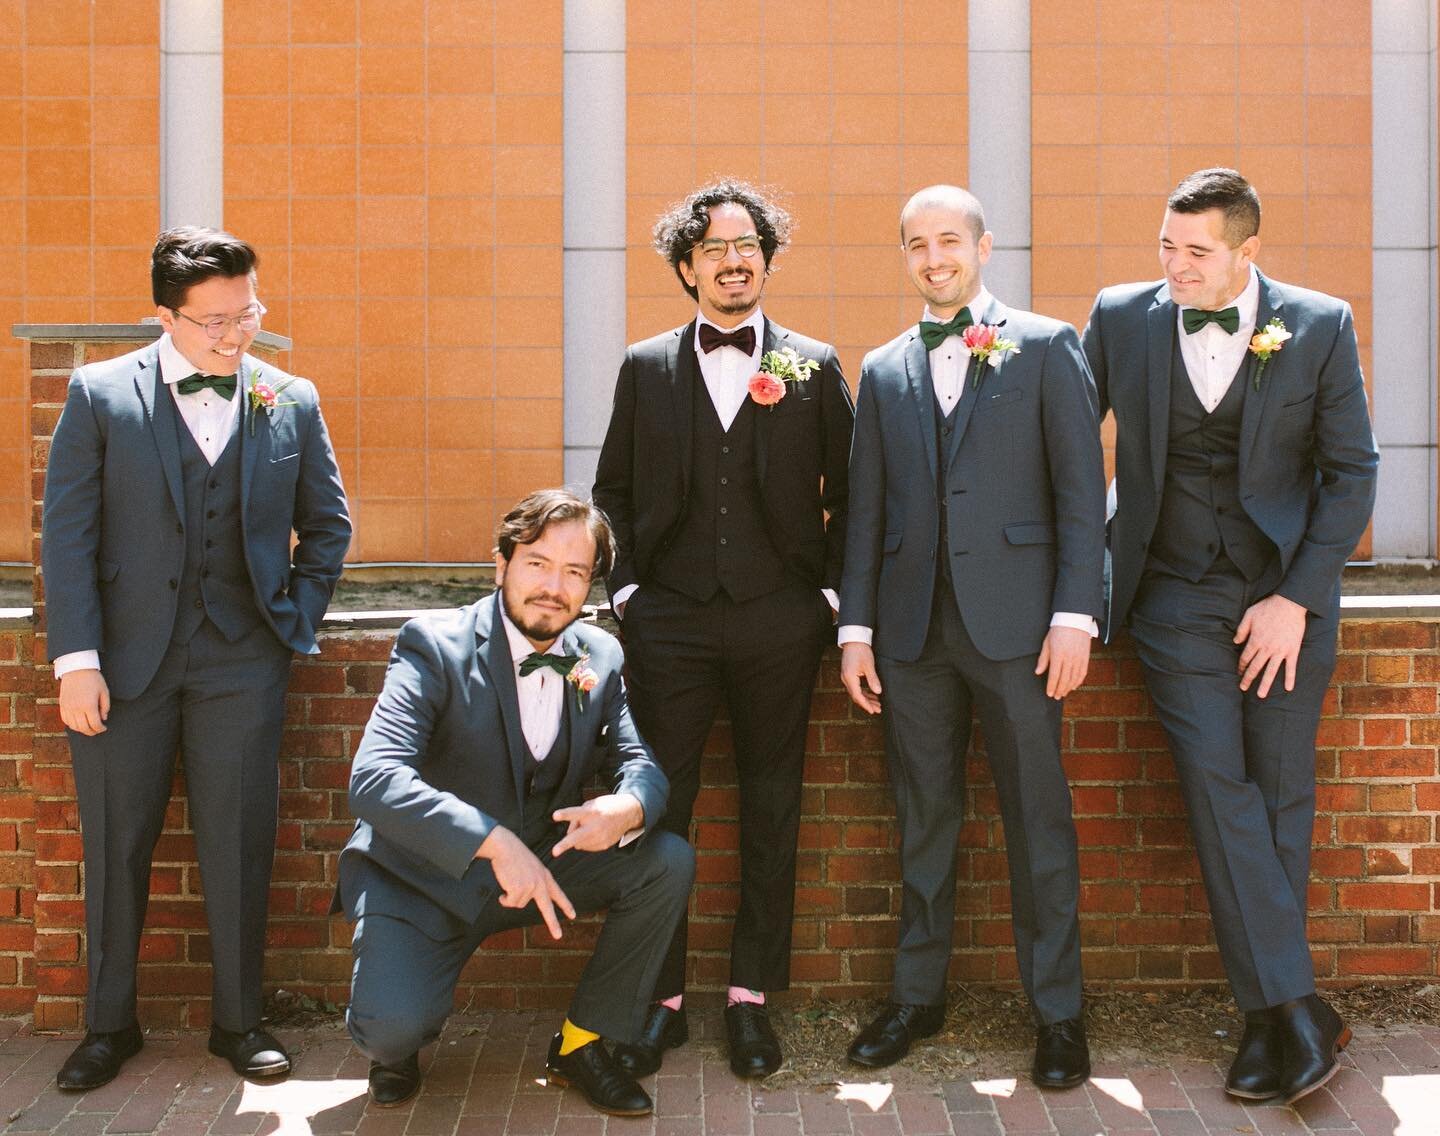 Groomsmen shenanigans on Miguel&rsquo;s wedding day 🎉
#nycweddingphotographer